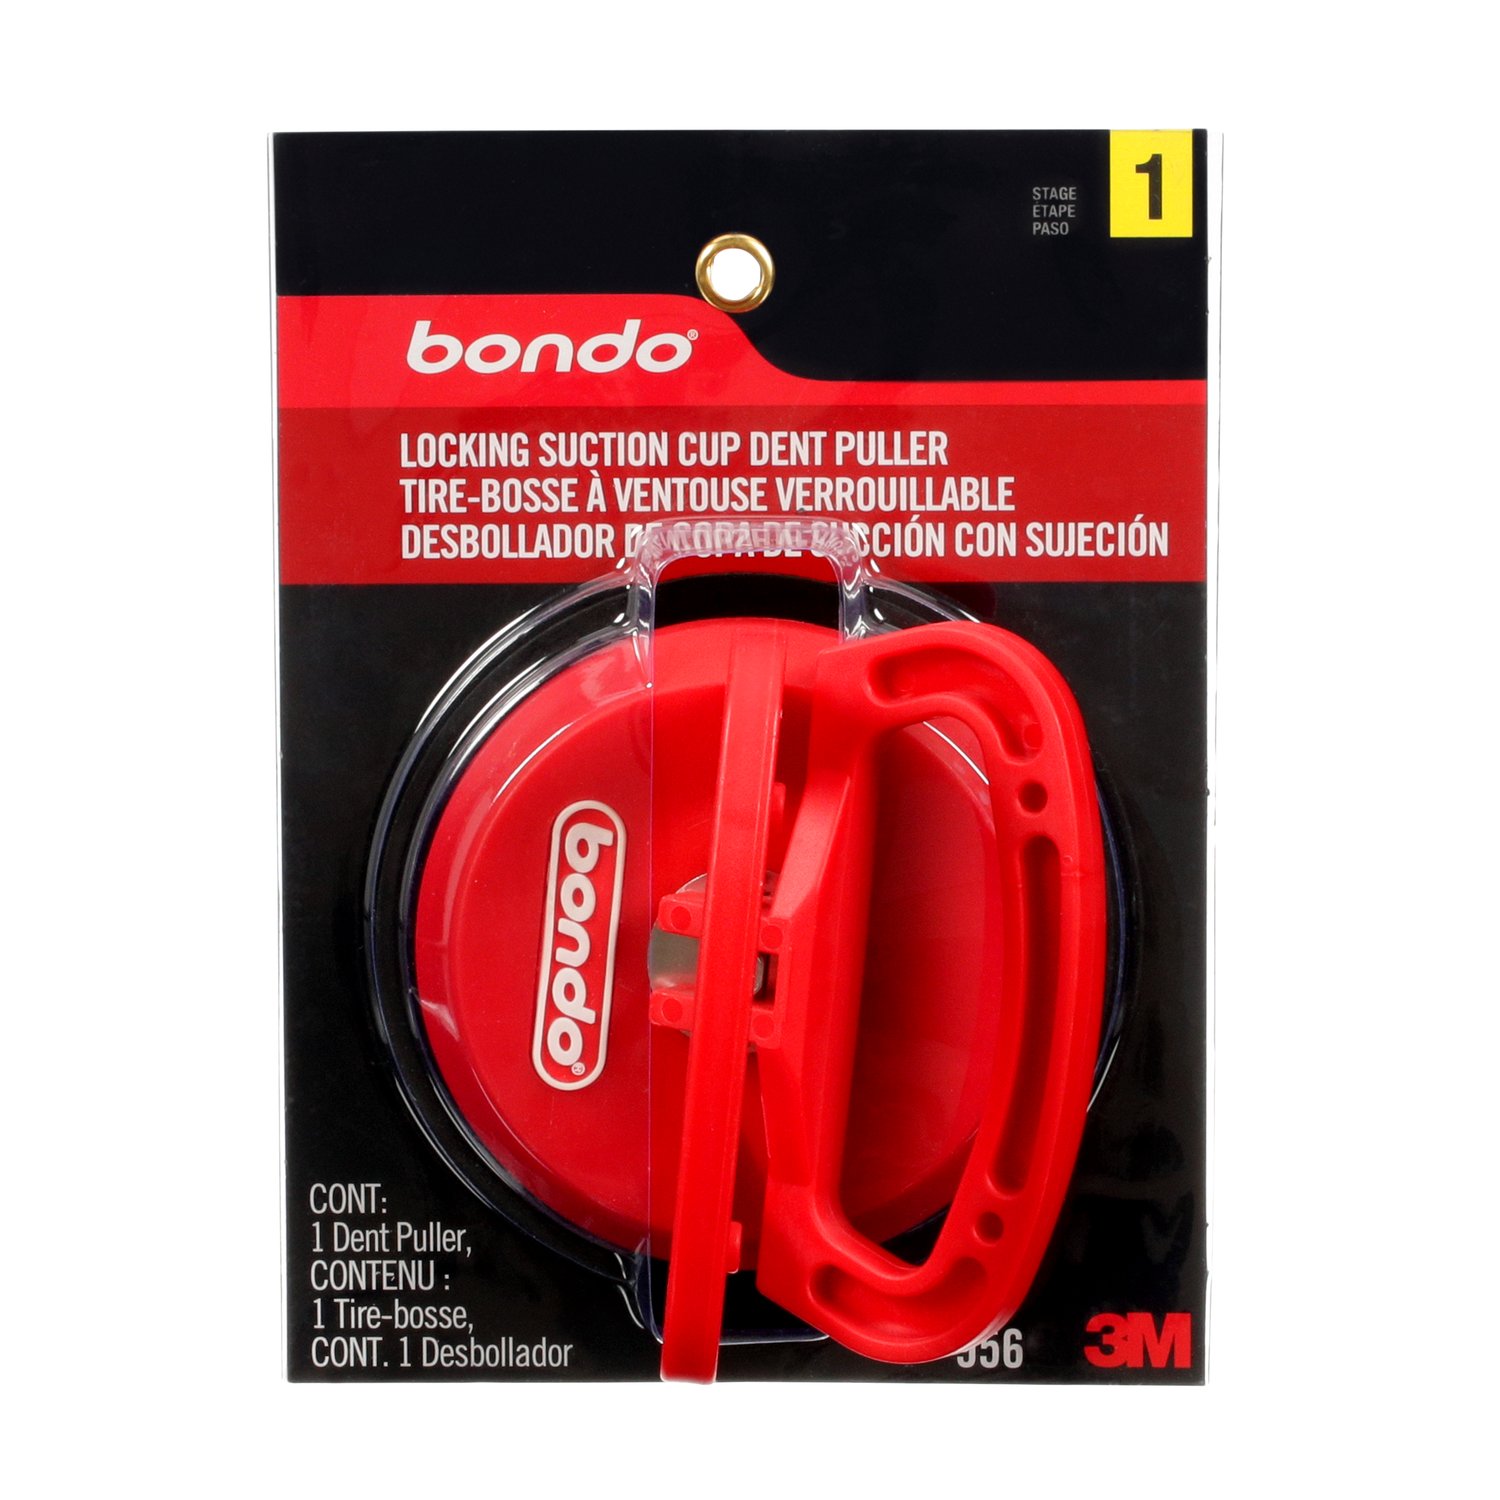 7100151310 - Bondo Double Handle Locking Suction Cup Dent Puller, 00956, 2 per case